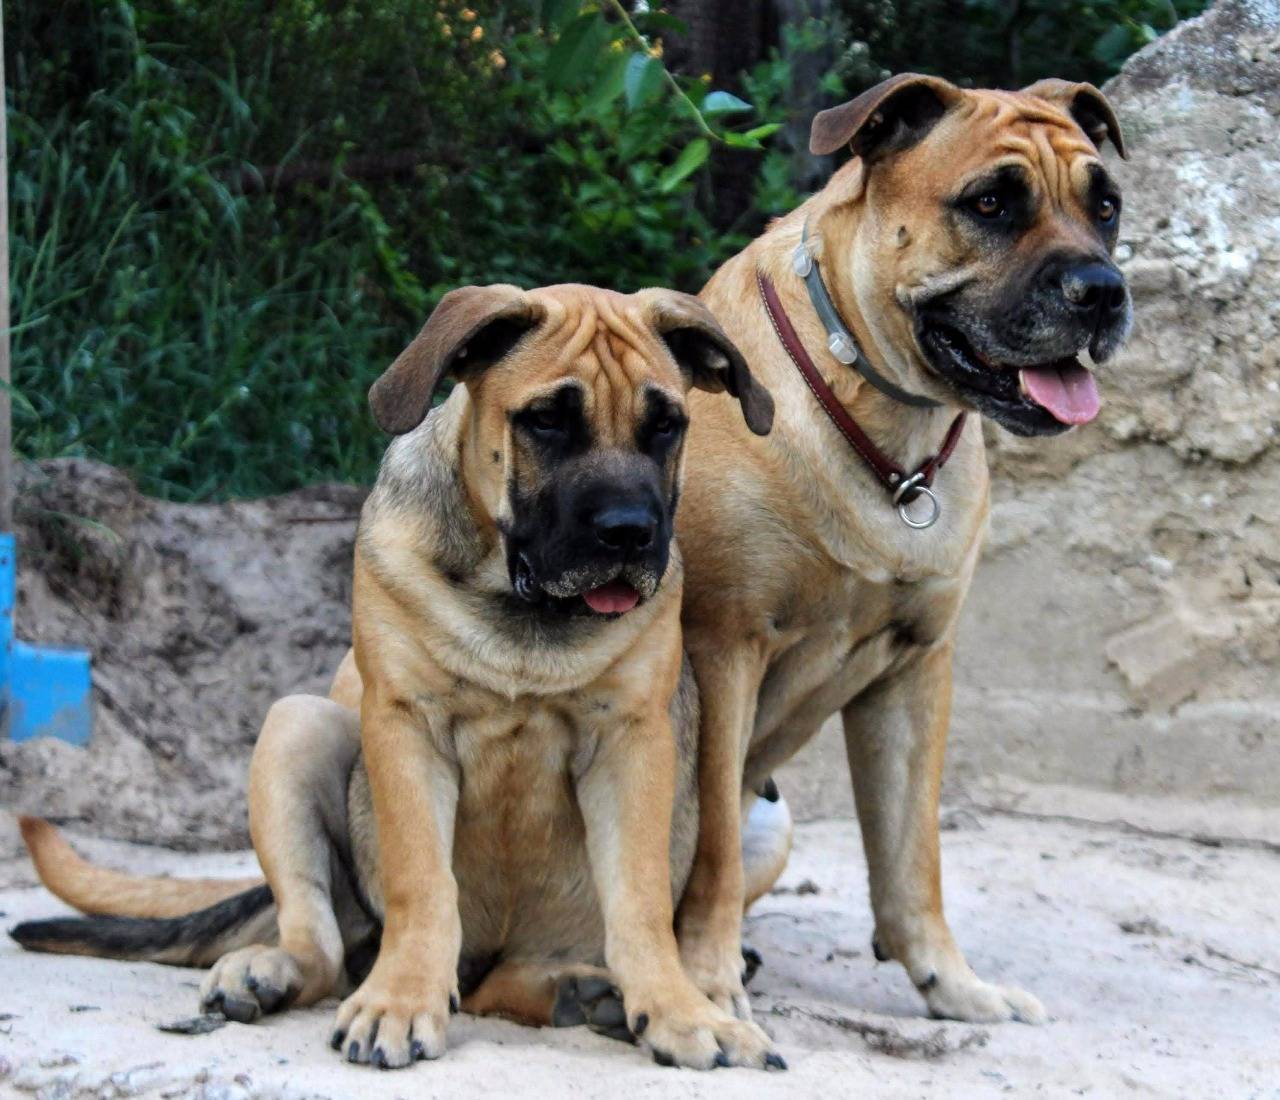 Ка де бо или мальорский мастиф: фото и характеристика породы собак
ка де бо или мальорский мастиф: фото и характеристика породы собак